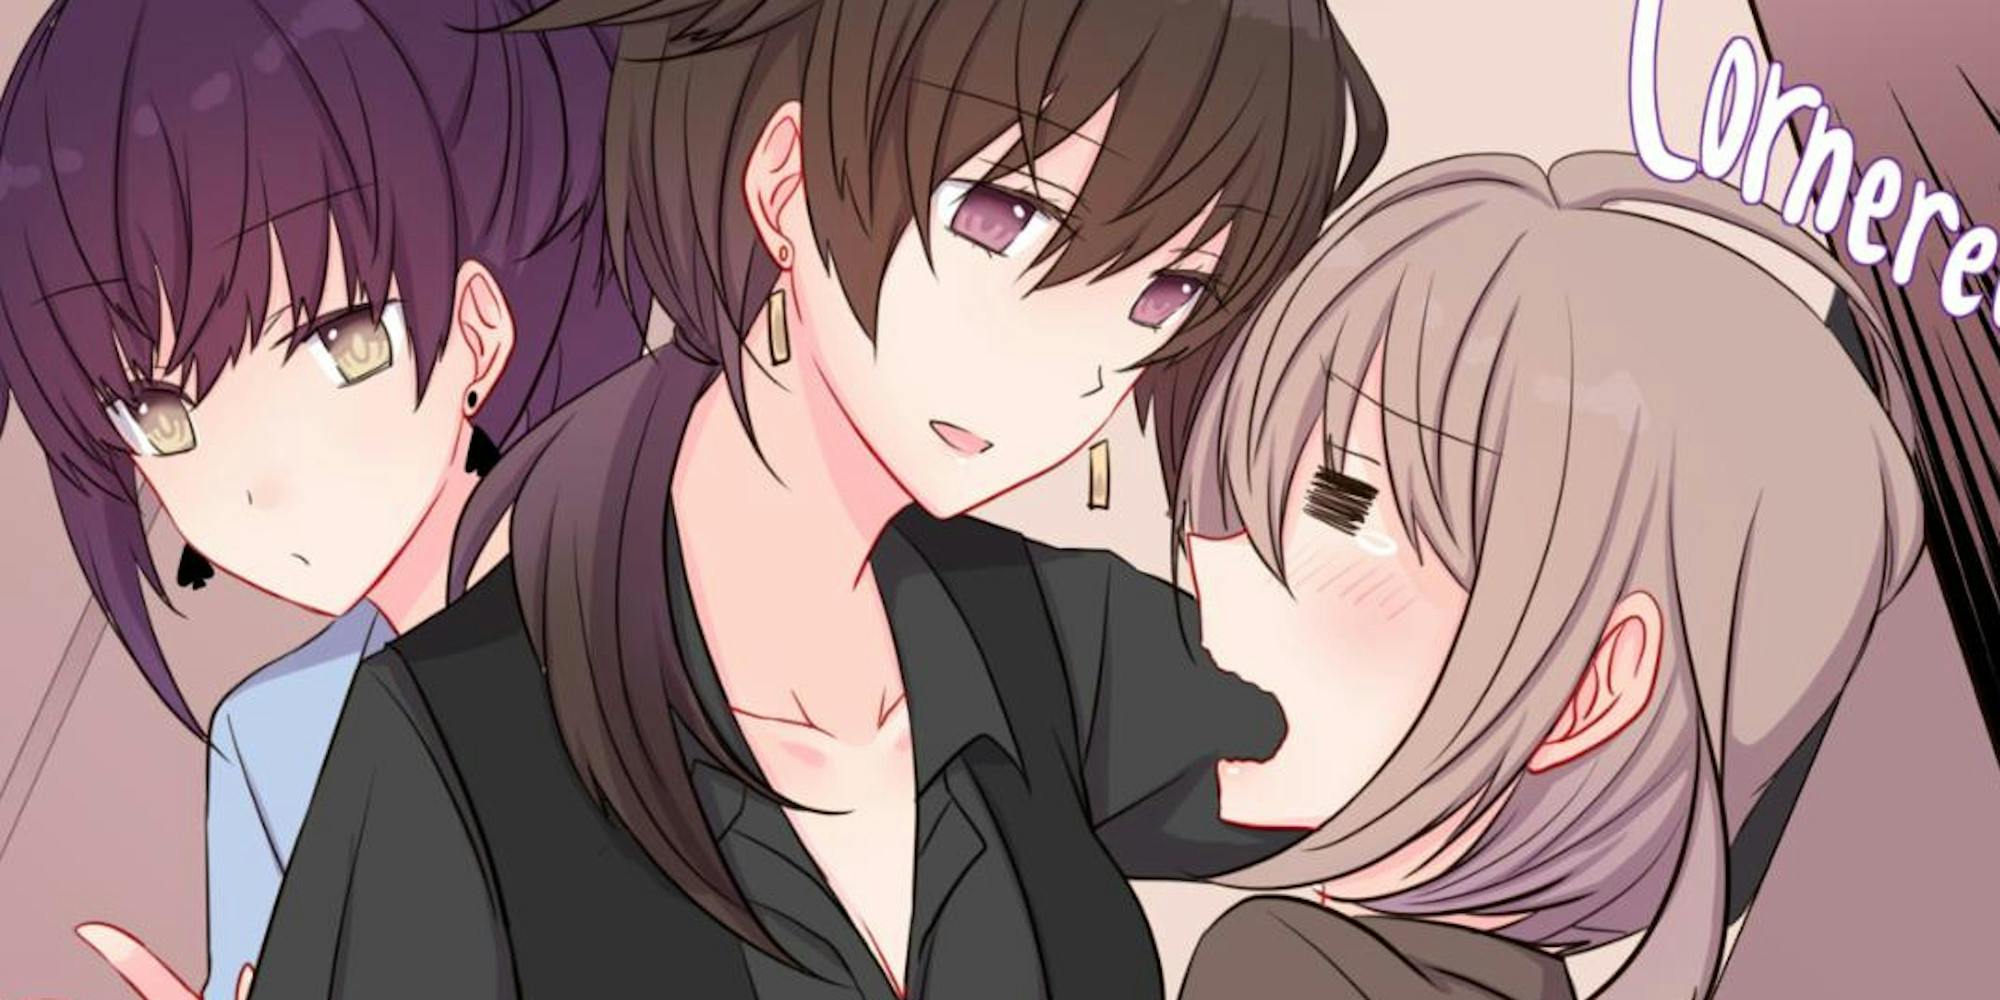 Anime Girl Lesbian Hentai - Lesbian Hentai: Best Yuri Hentai to Read and Stream Online